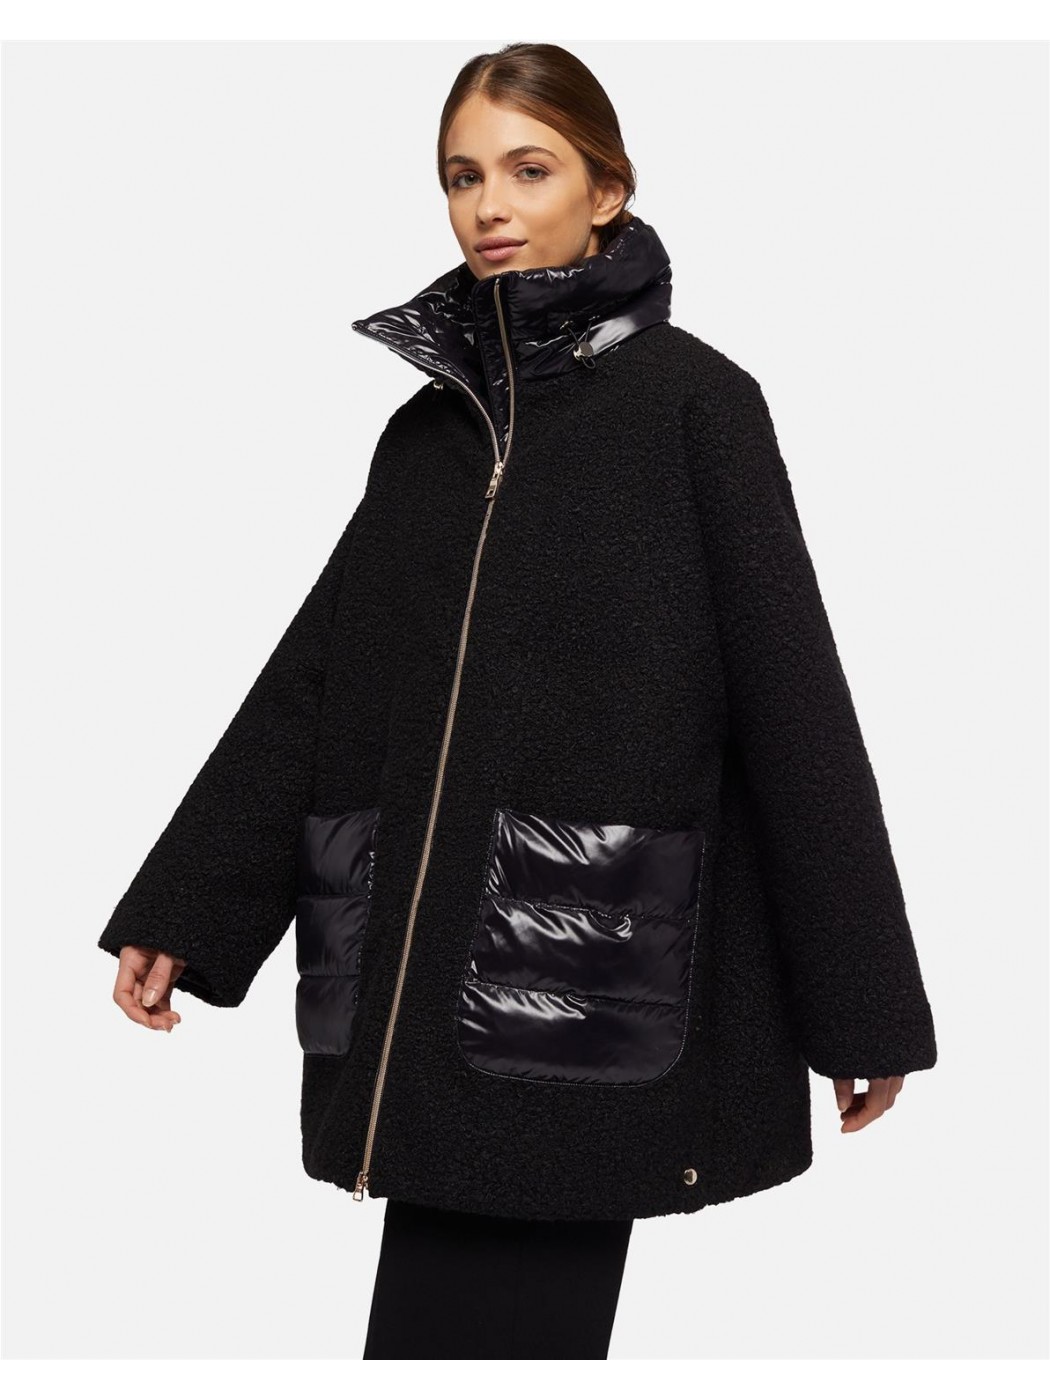 abrigo mujer invierno geox precio barato online #abrigos